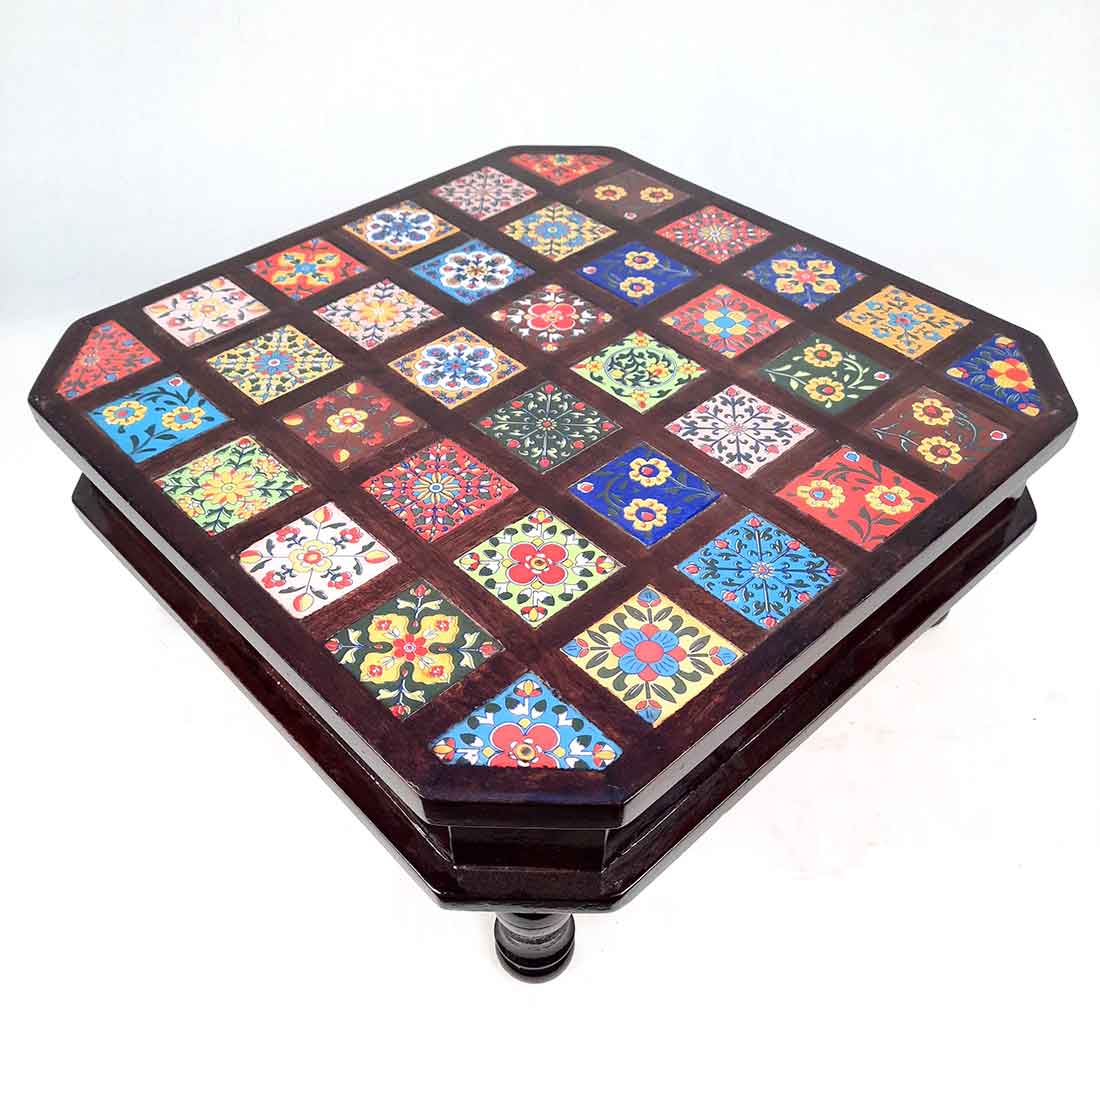 Wooden Chowki with Ceramic Tiles - For For Pooja, Weddings & Festivals - 14 Inch - ApkaMart